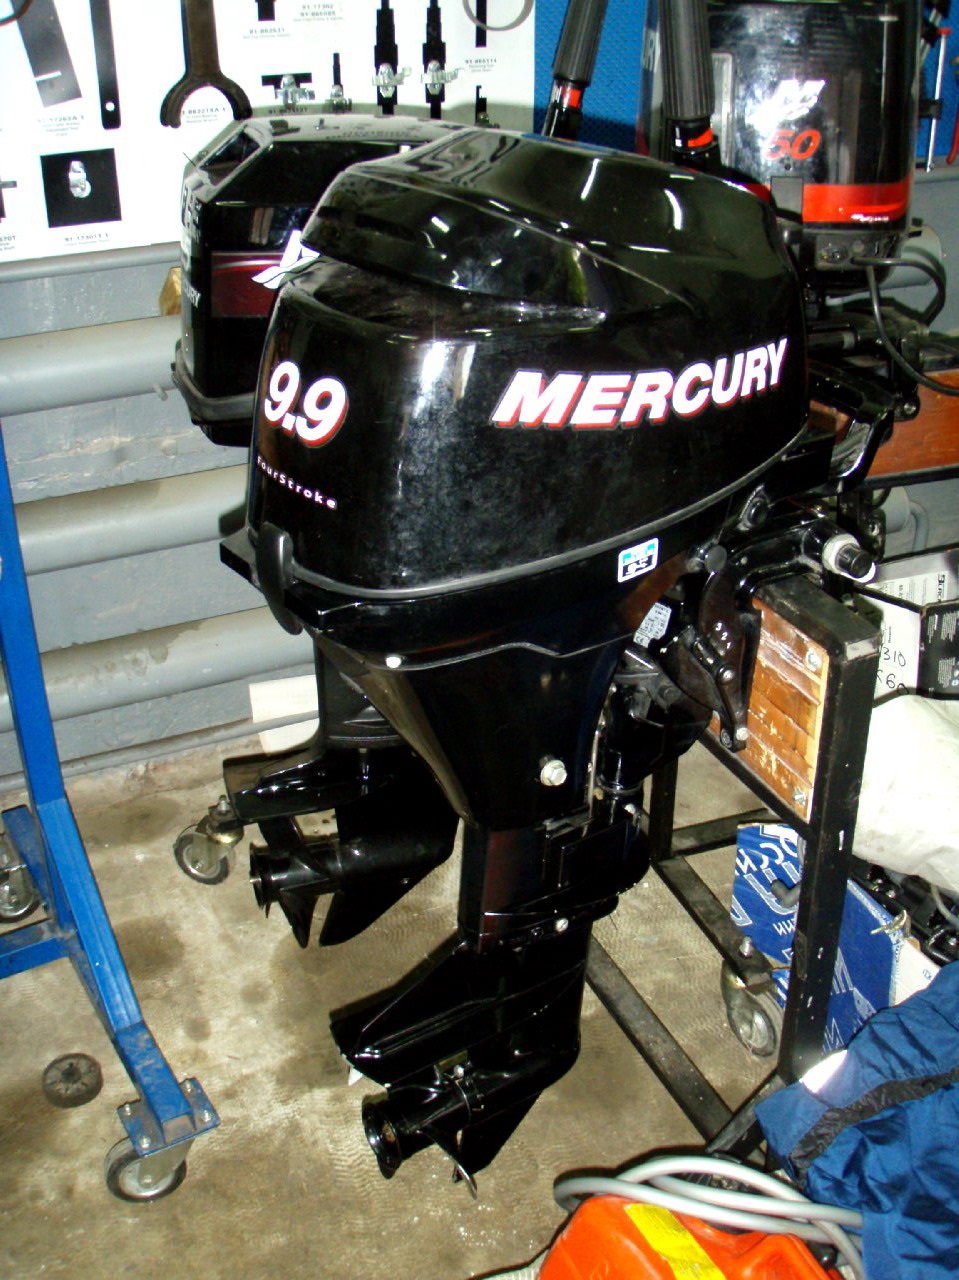 Купить меркурий 4 тактный. Лодочный мотор Меркурий 9.9. Лодочный мотор Меркури 9.9 4 такта. Mercury мотор Mercury 9.9. Лодочный мотор Mercury f9.9m.